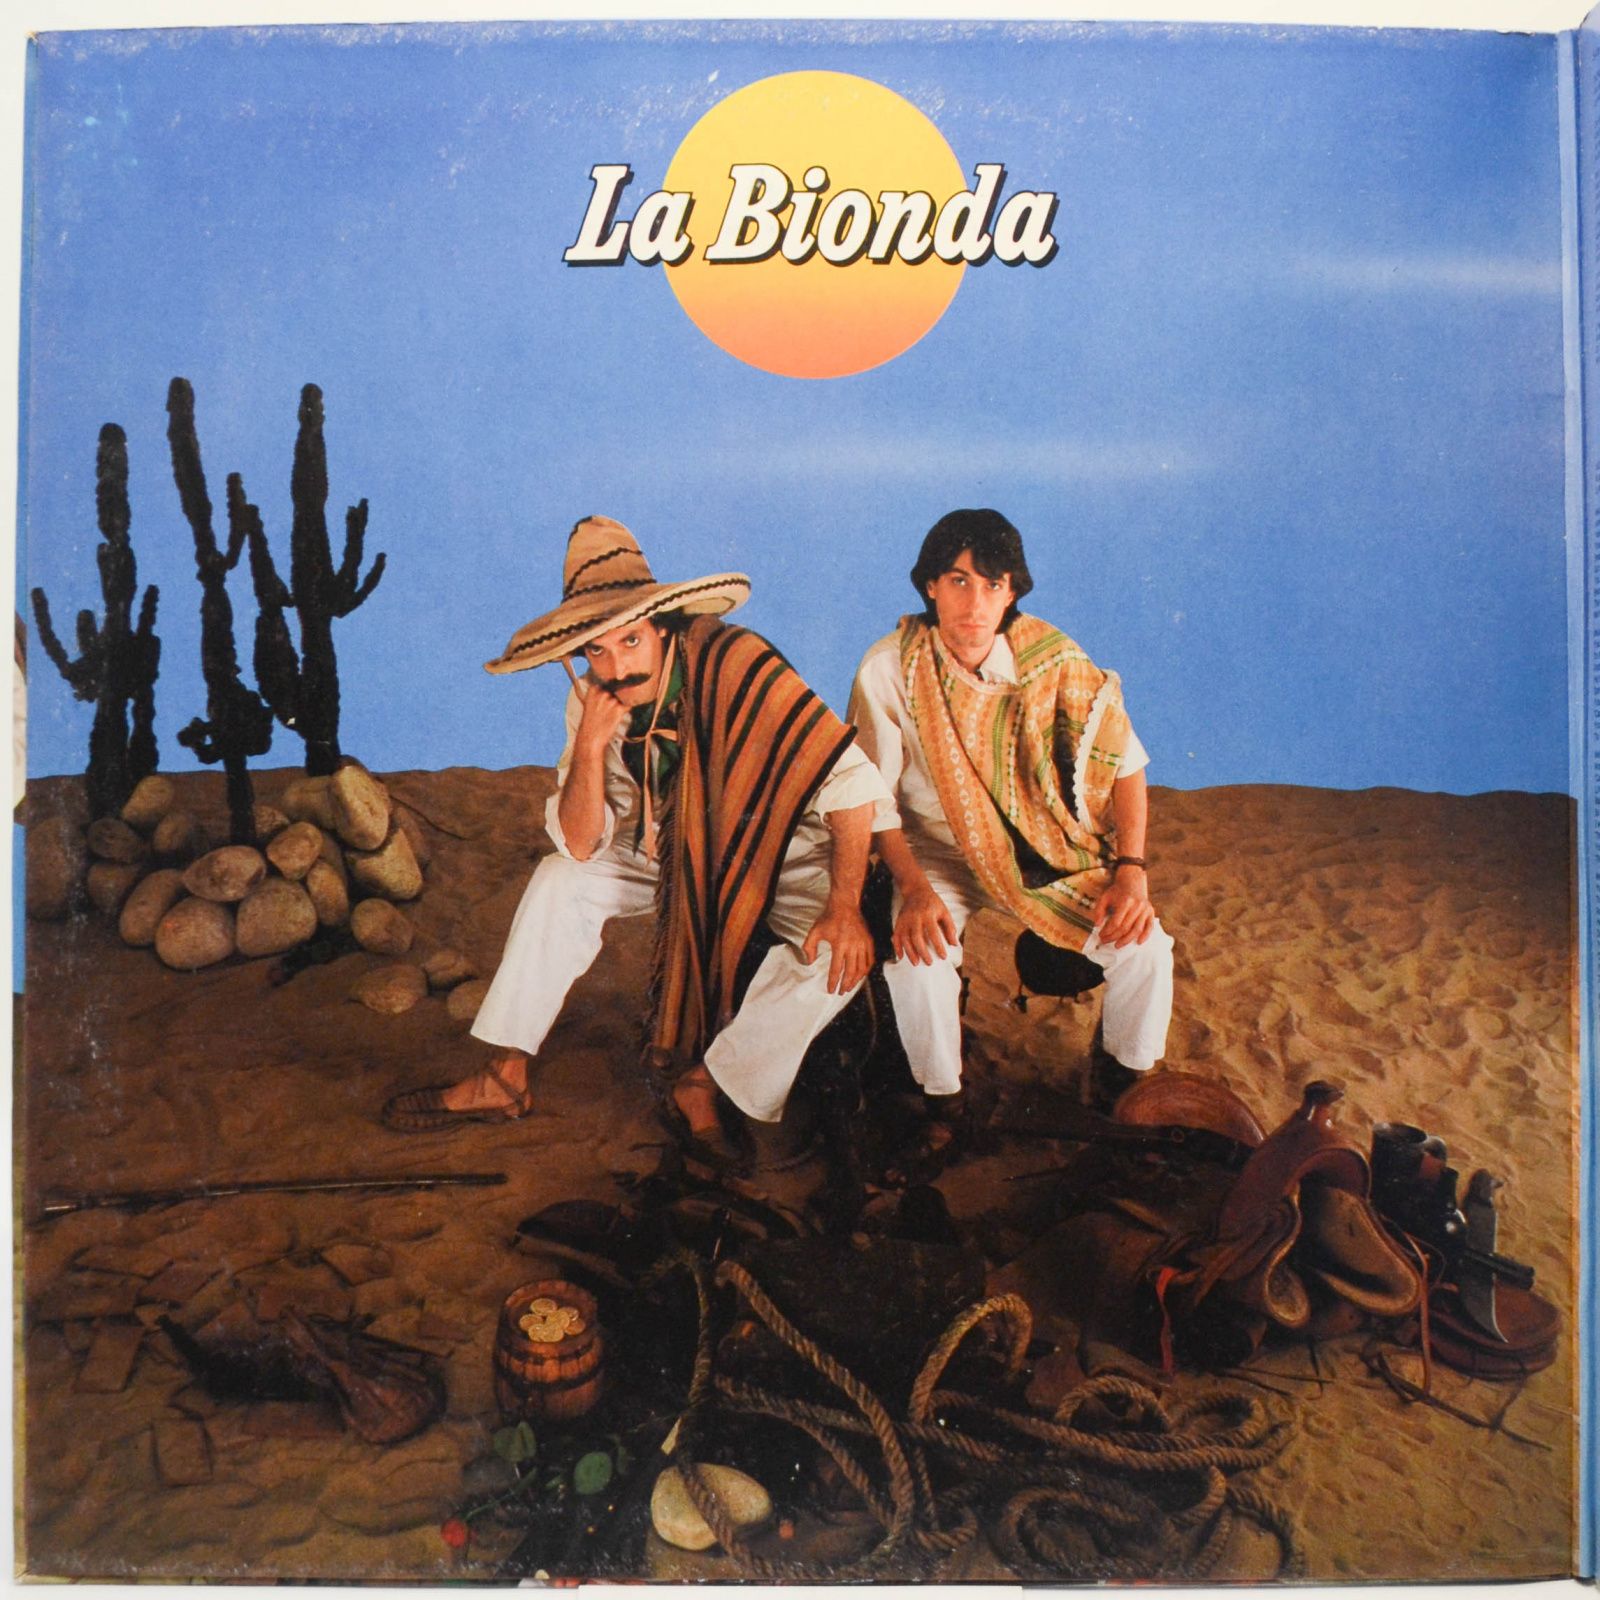 La Bionda — Bandido, 1979